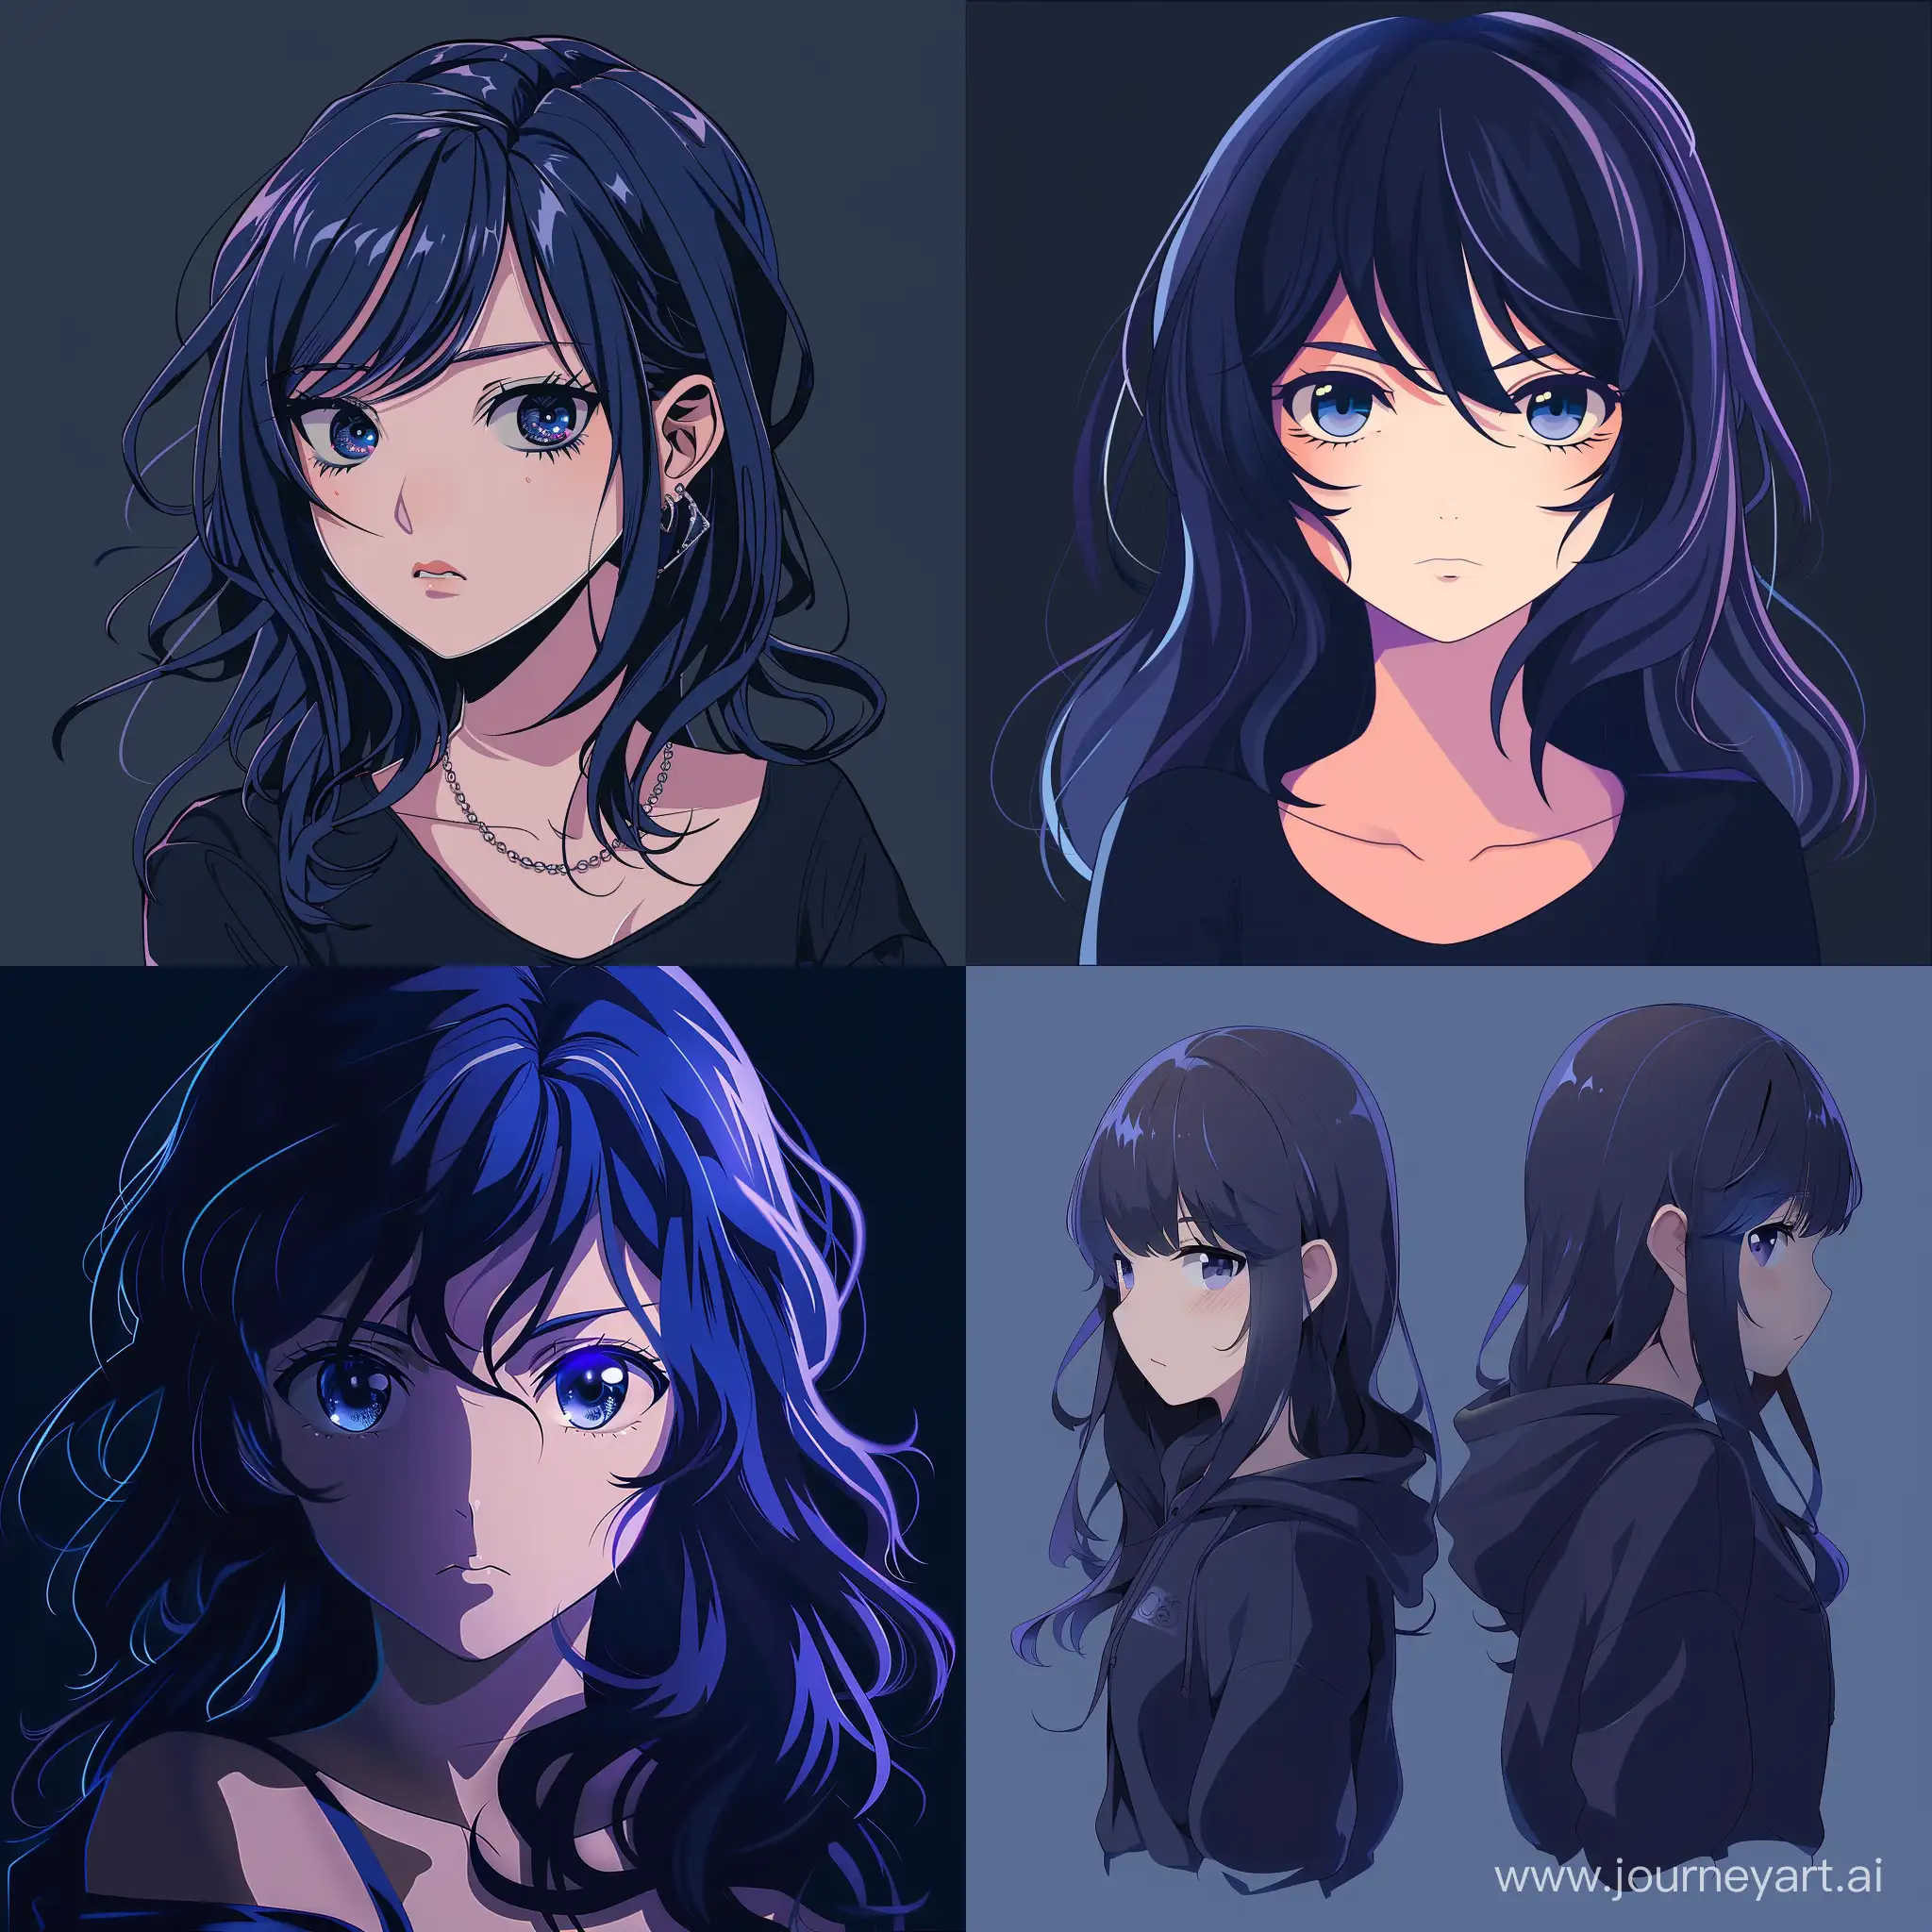 Anime avatar in dark blue or dark purple style